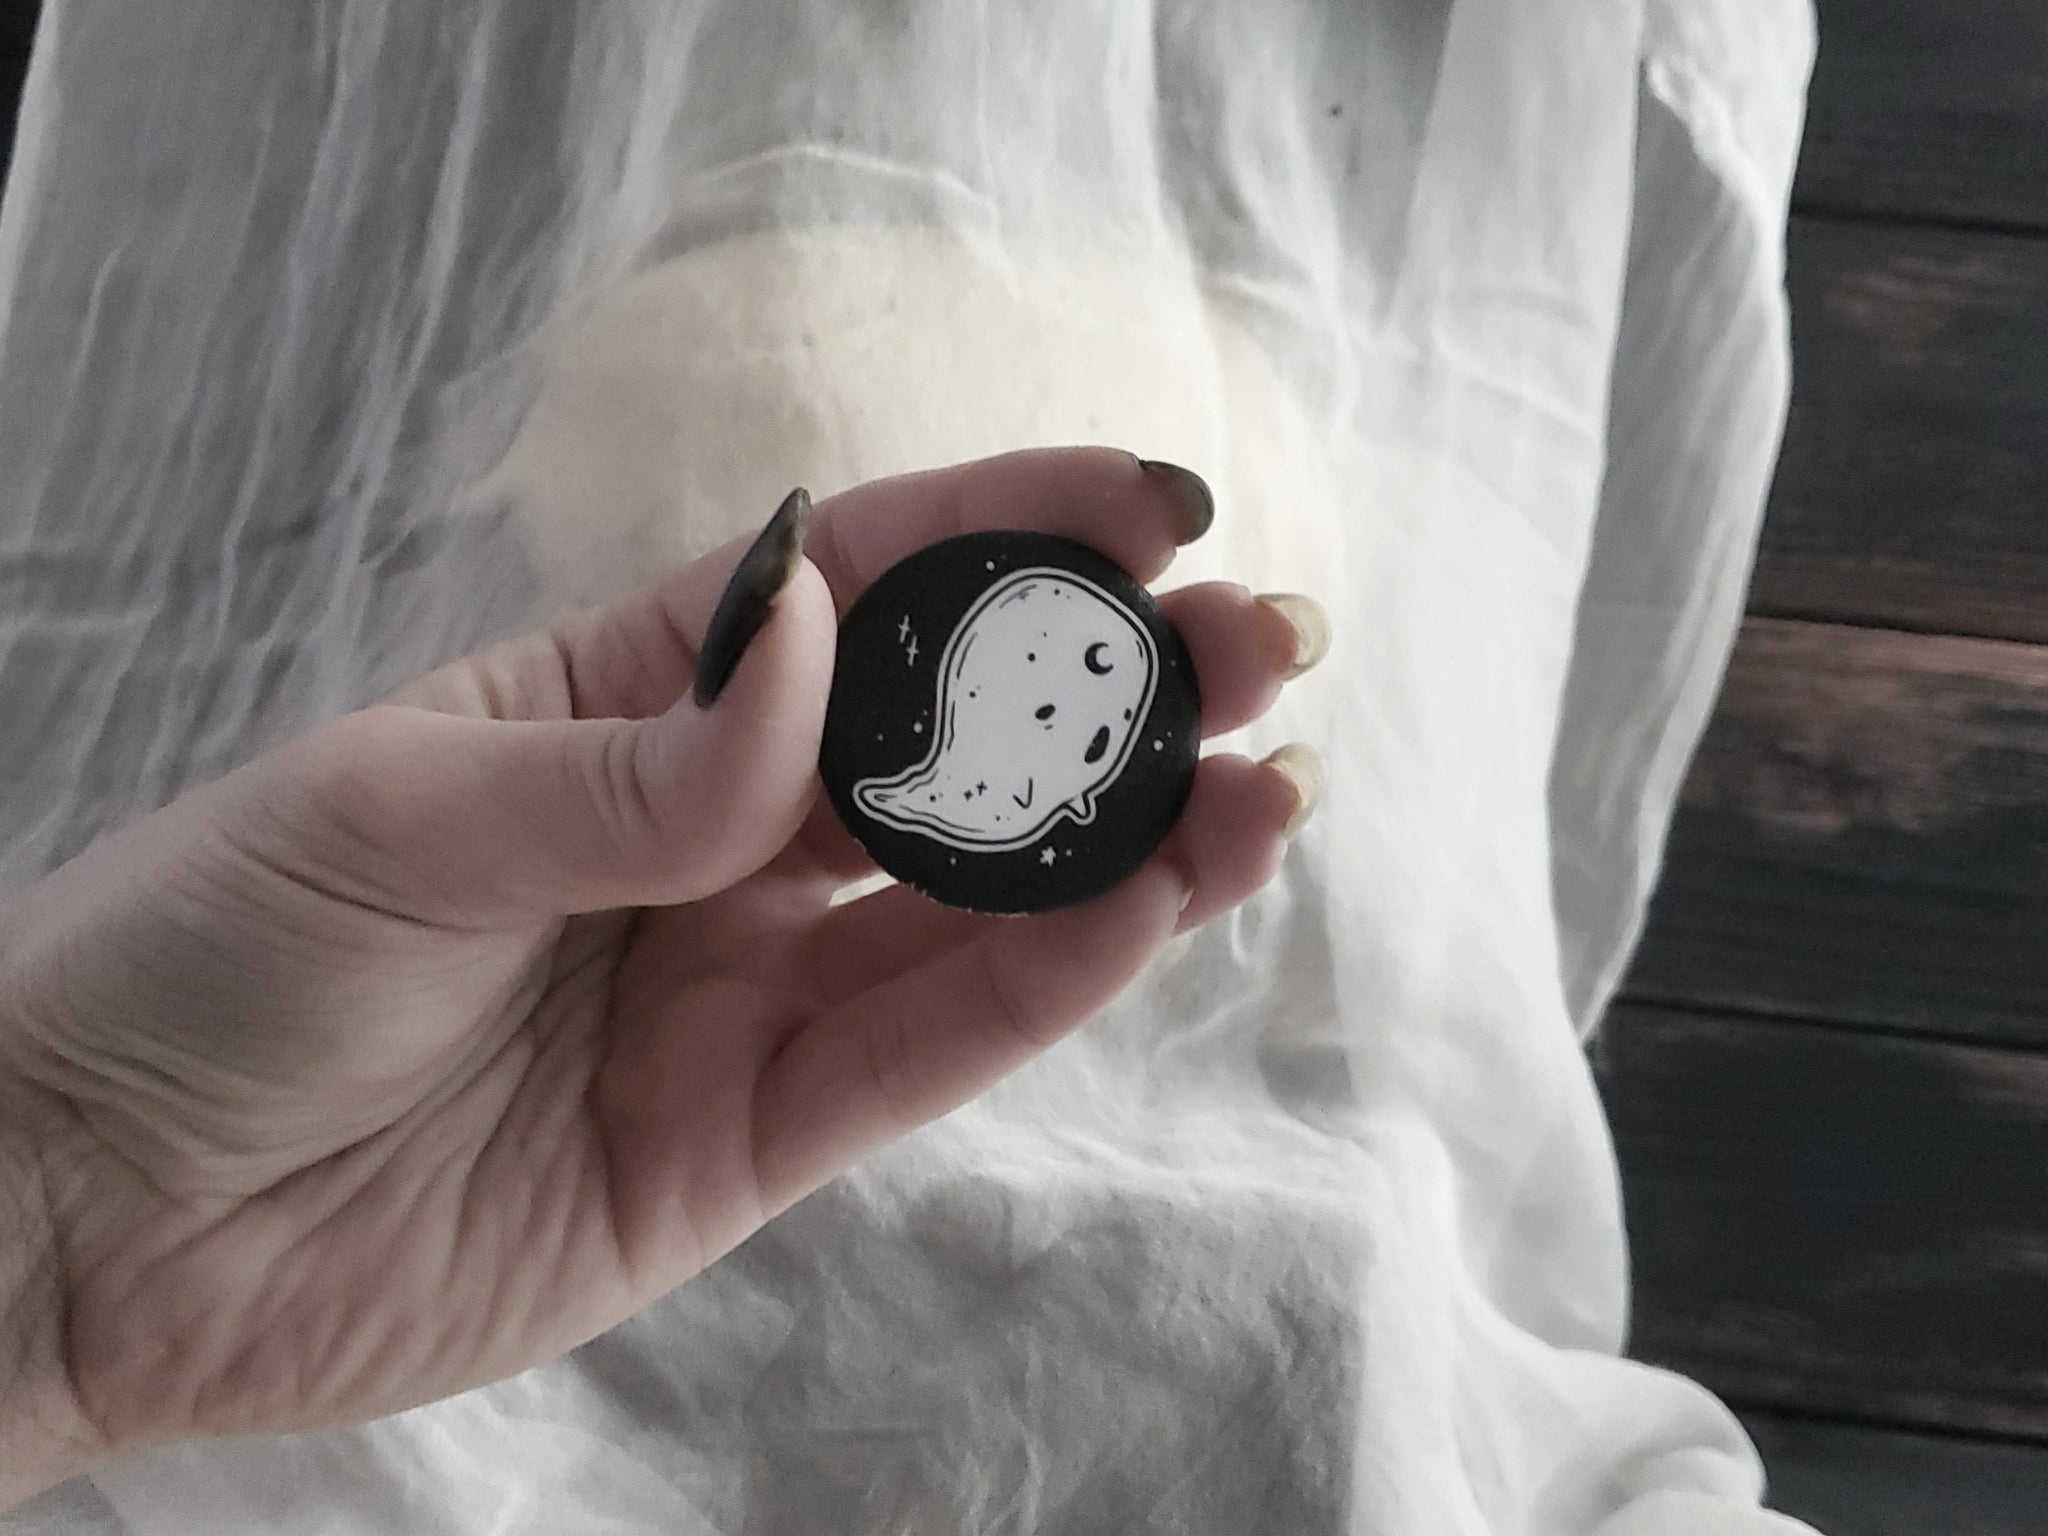 Moon Ghost pin